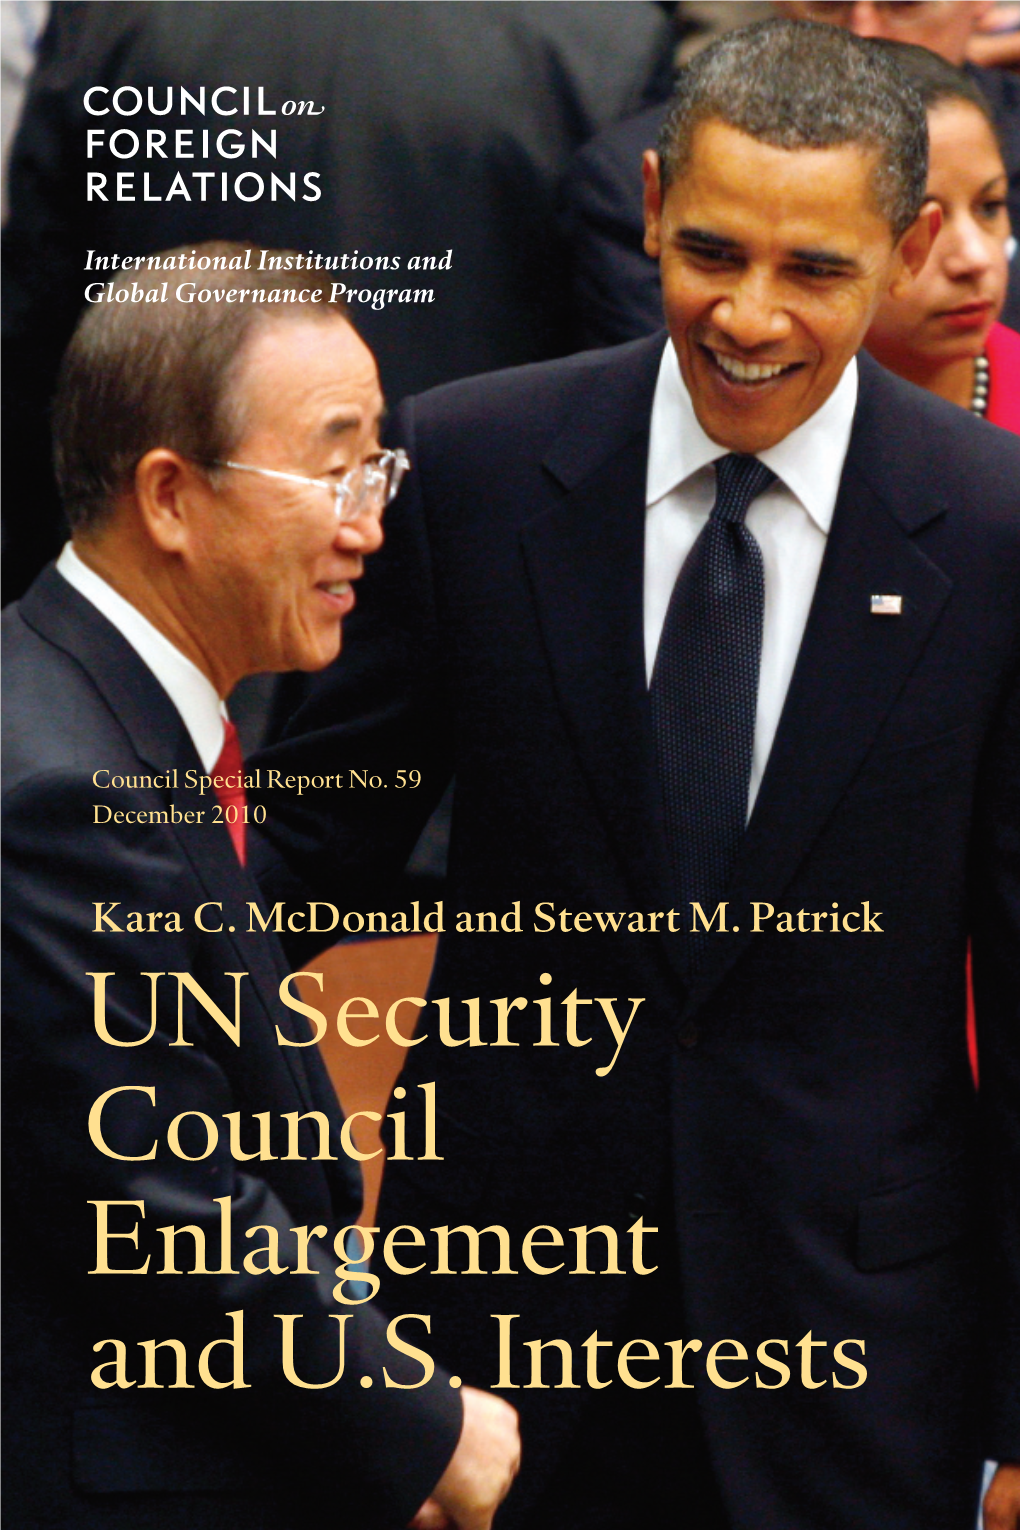 UN Security Council Enlargement and U.S. Interests